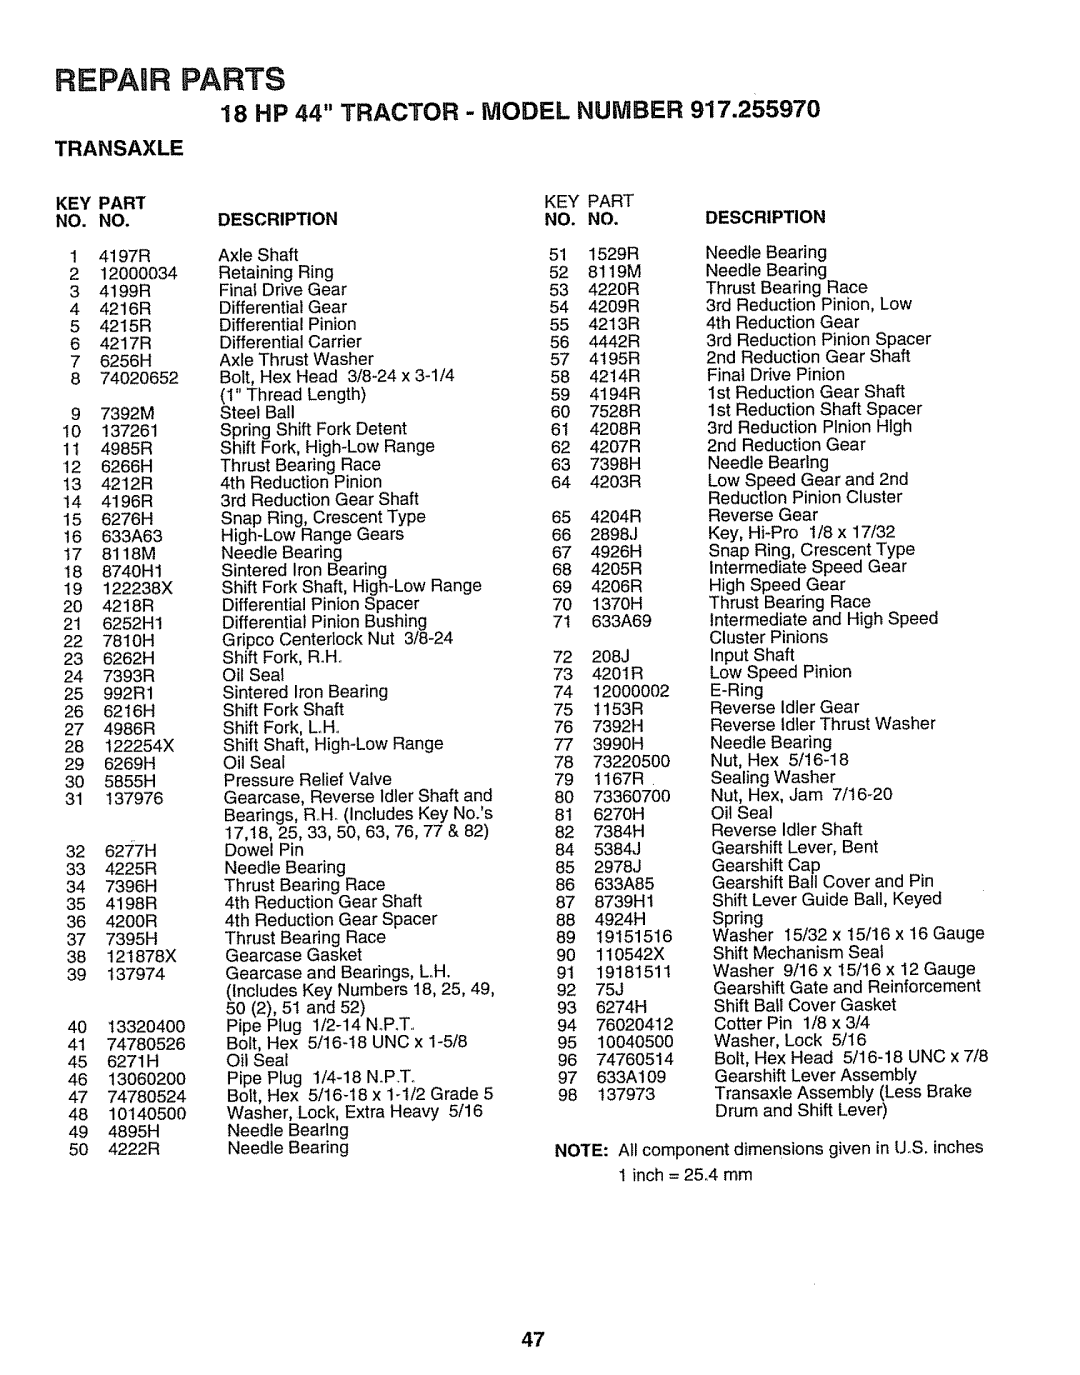 Sears 917.25597 Transaxle, Repair Parts, 18 HP 44 TRACTOR - MODEL NUMBER, Key Part No. No, Description, in U.S. inches 